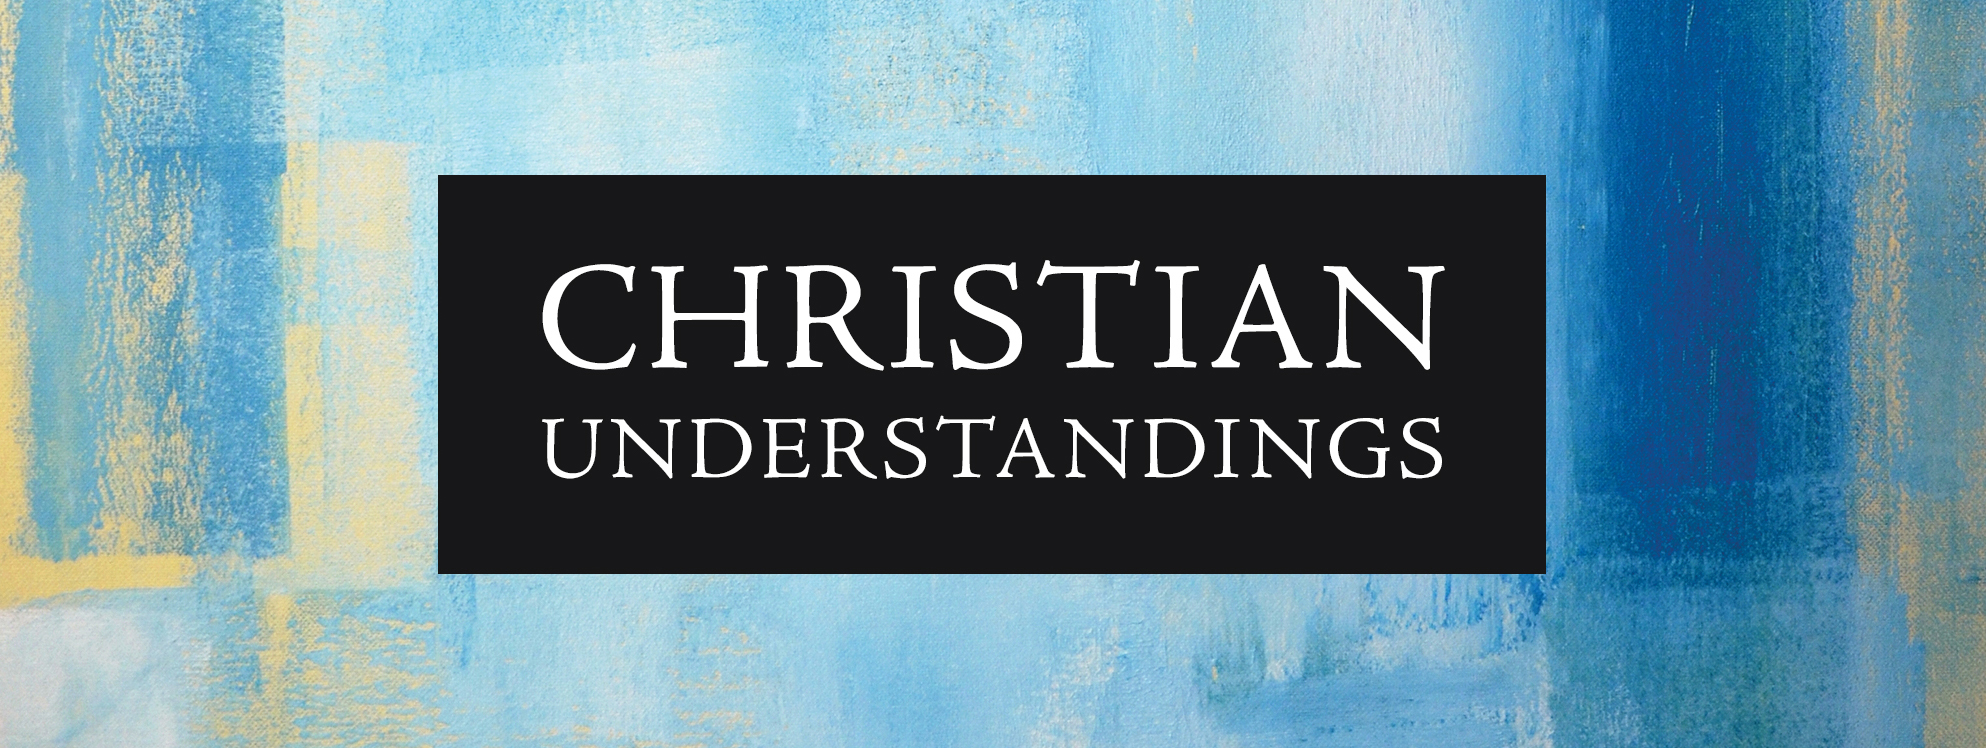 Christian Understandings banner image